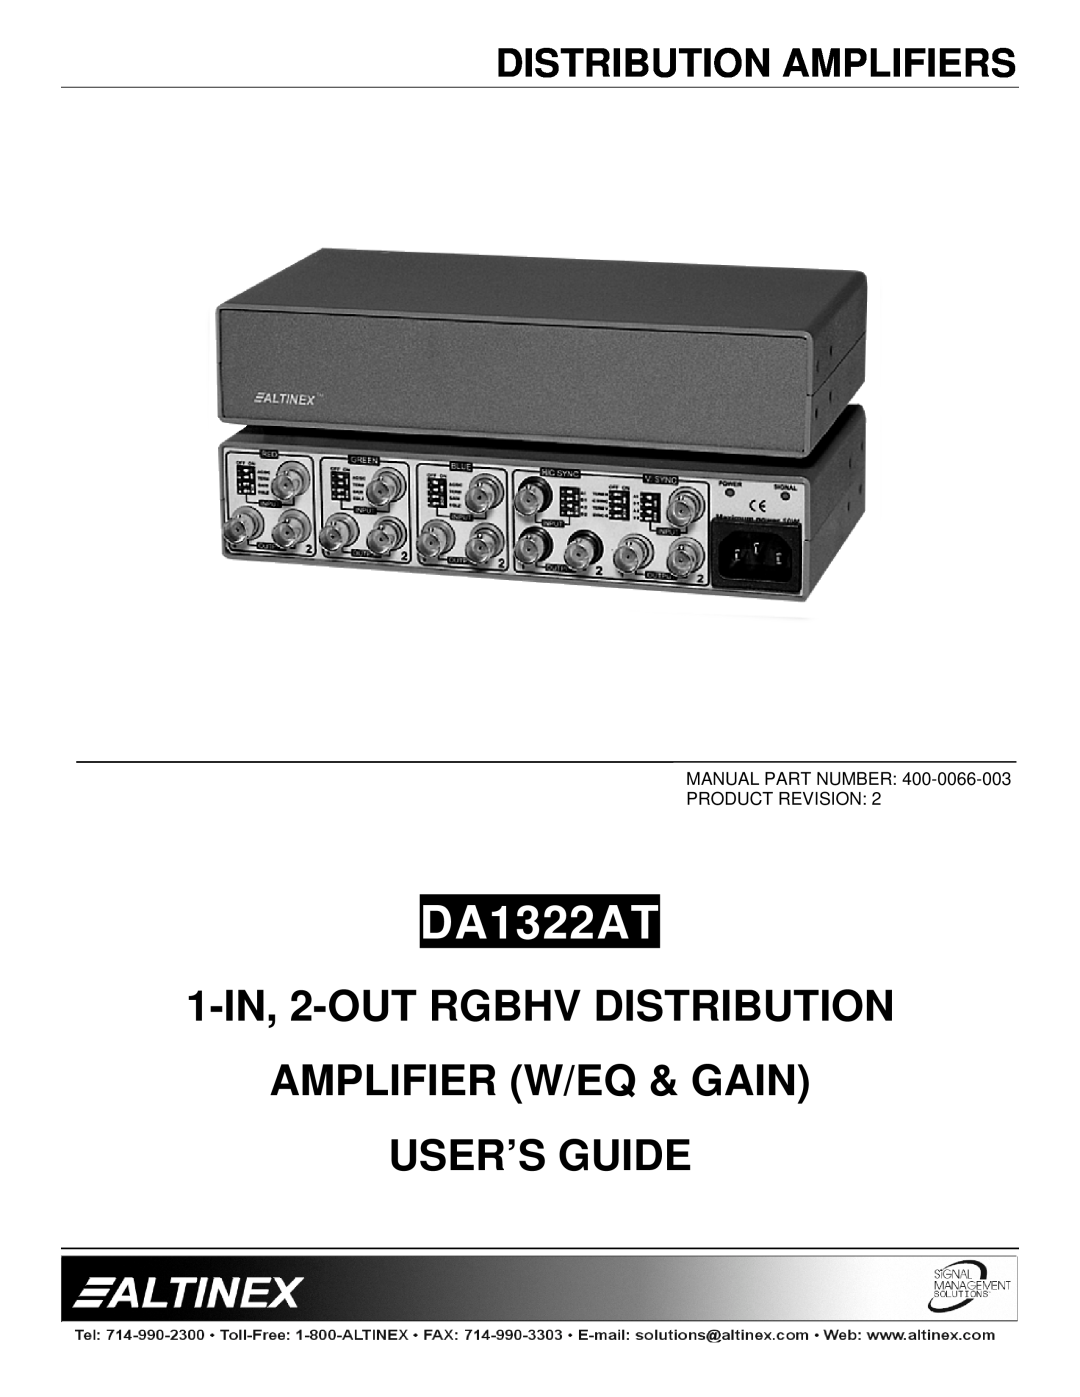 Altinex DA1322AT manual Distribution Amplifiers, 1-IN, 2-OUTRGBHV DISTRIBUTION, Amplifier W/Eq & Gain User’S Guide 